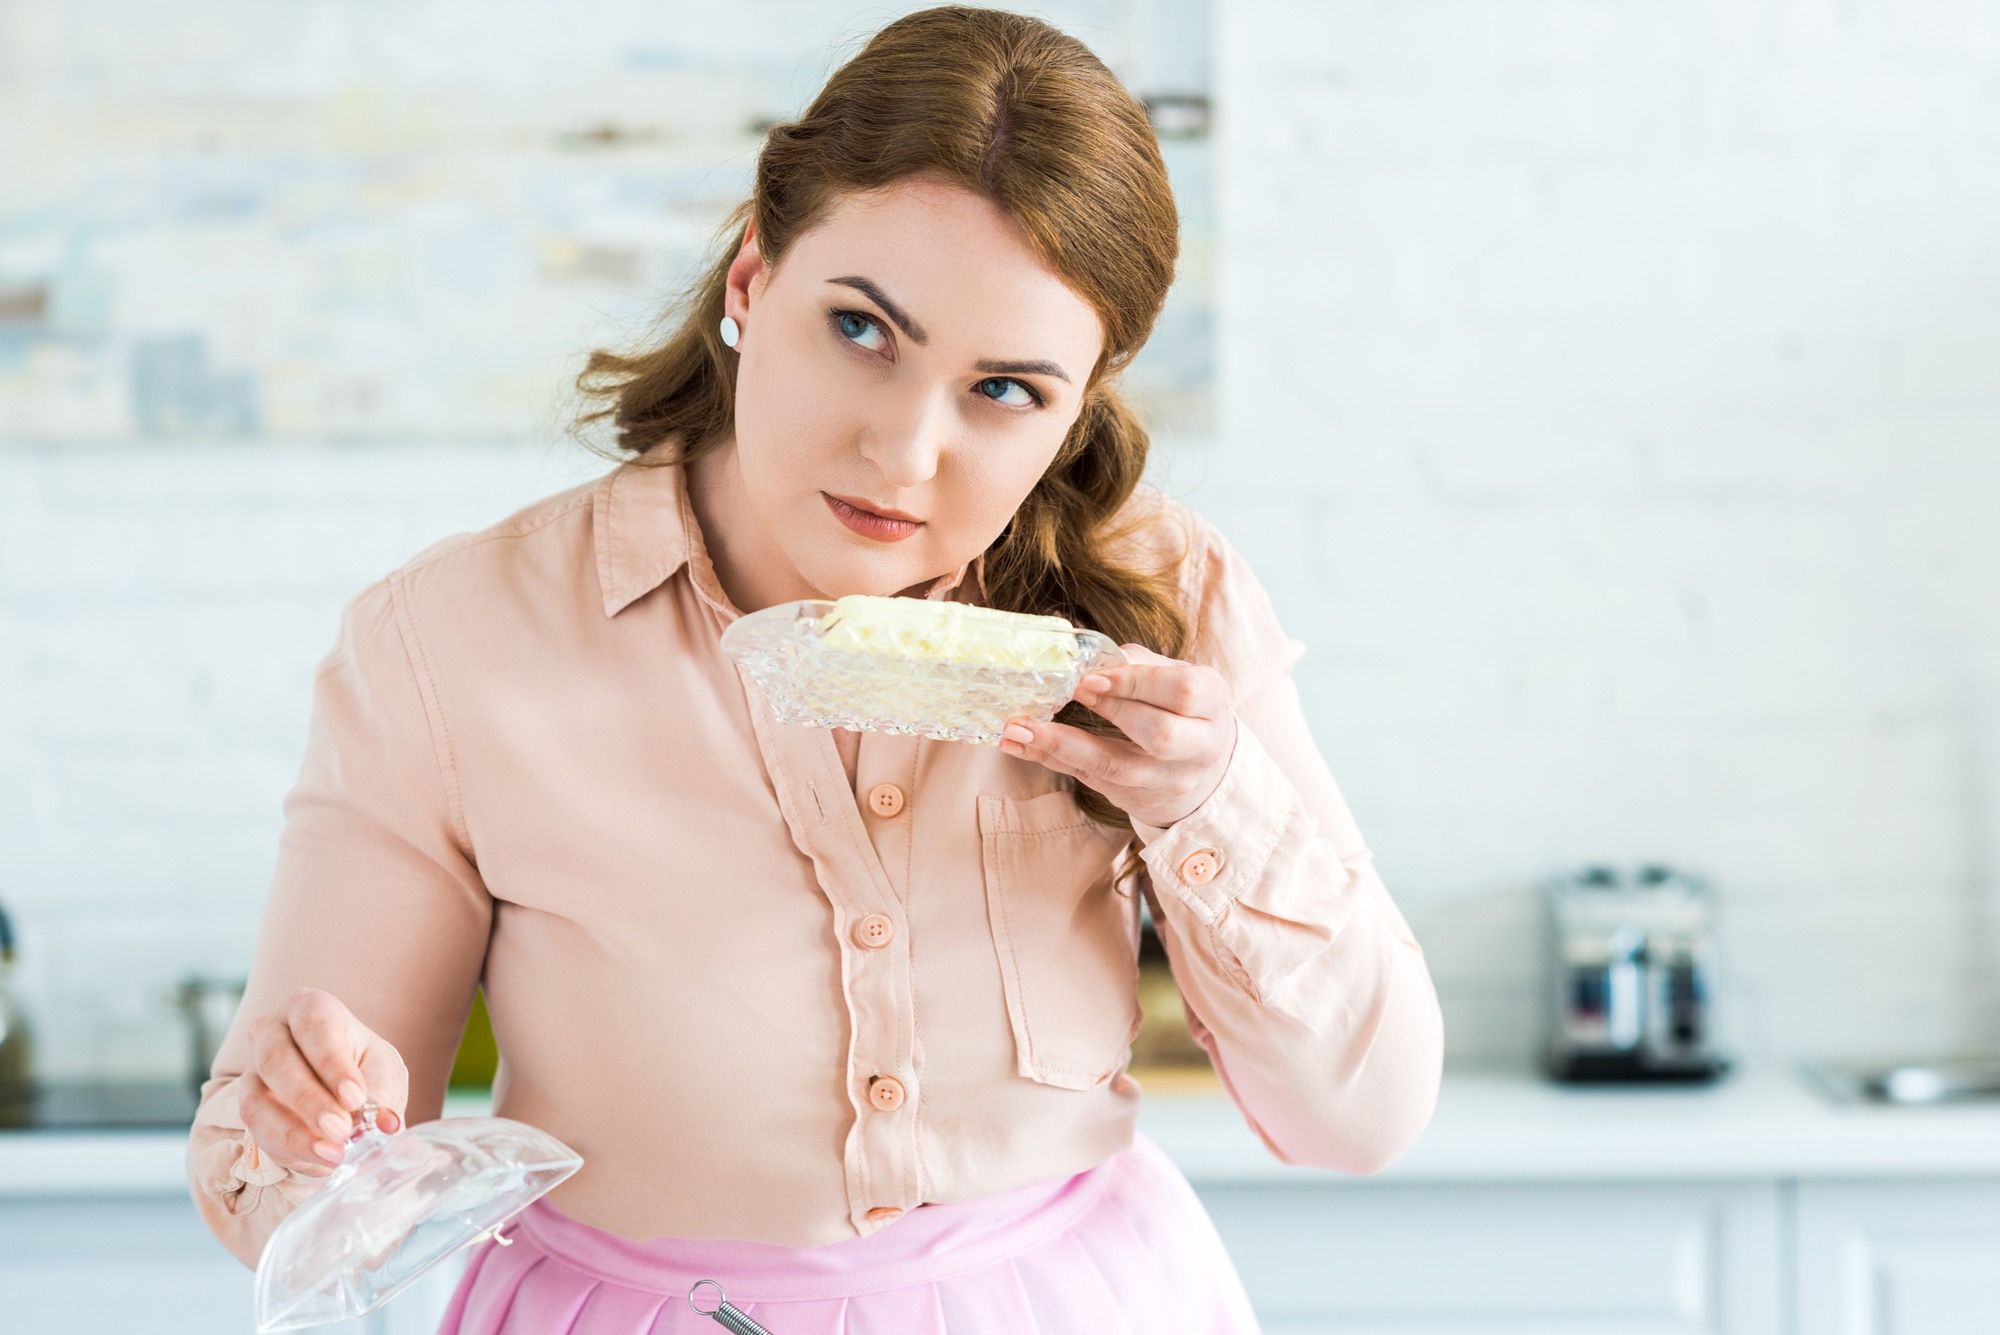 Woman inspecting butter regarding the Entenmann's All Butter Loaf Cake class action lawsuit